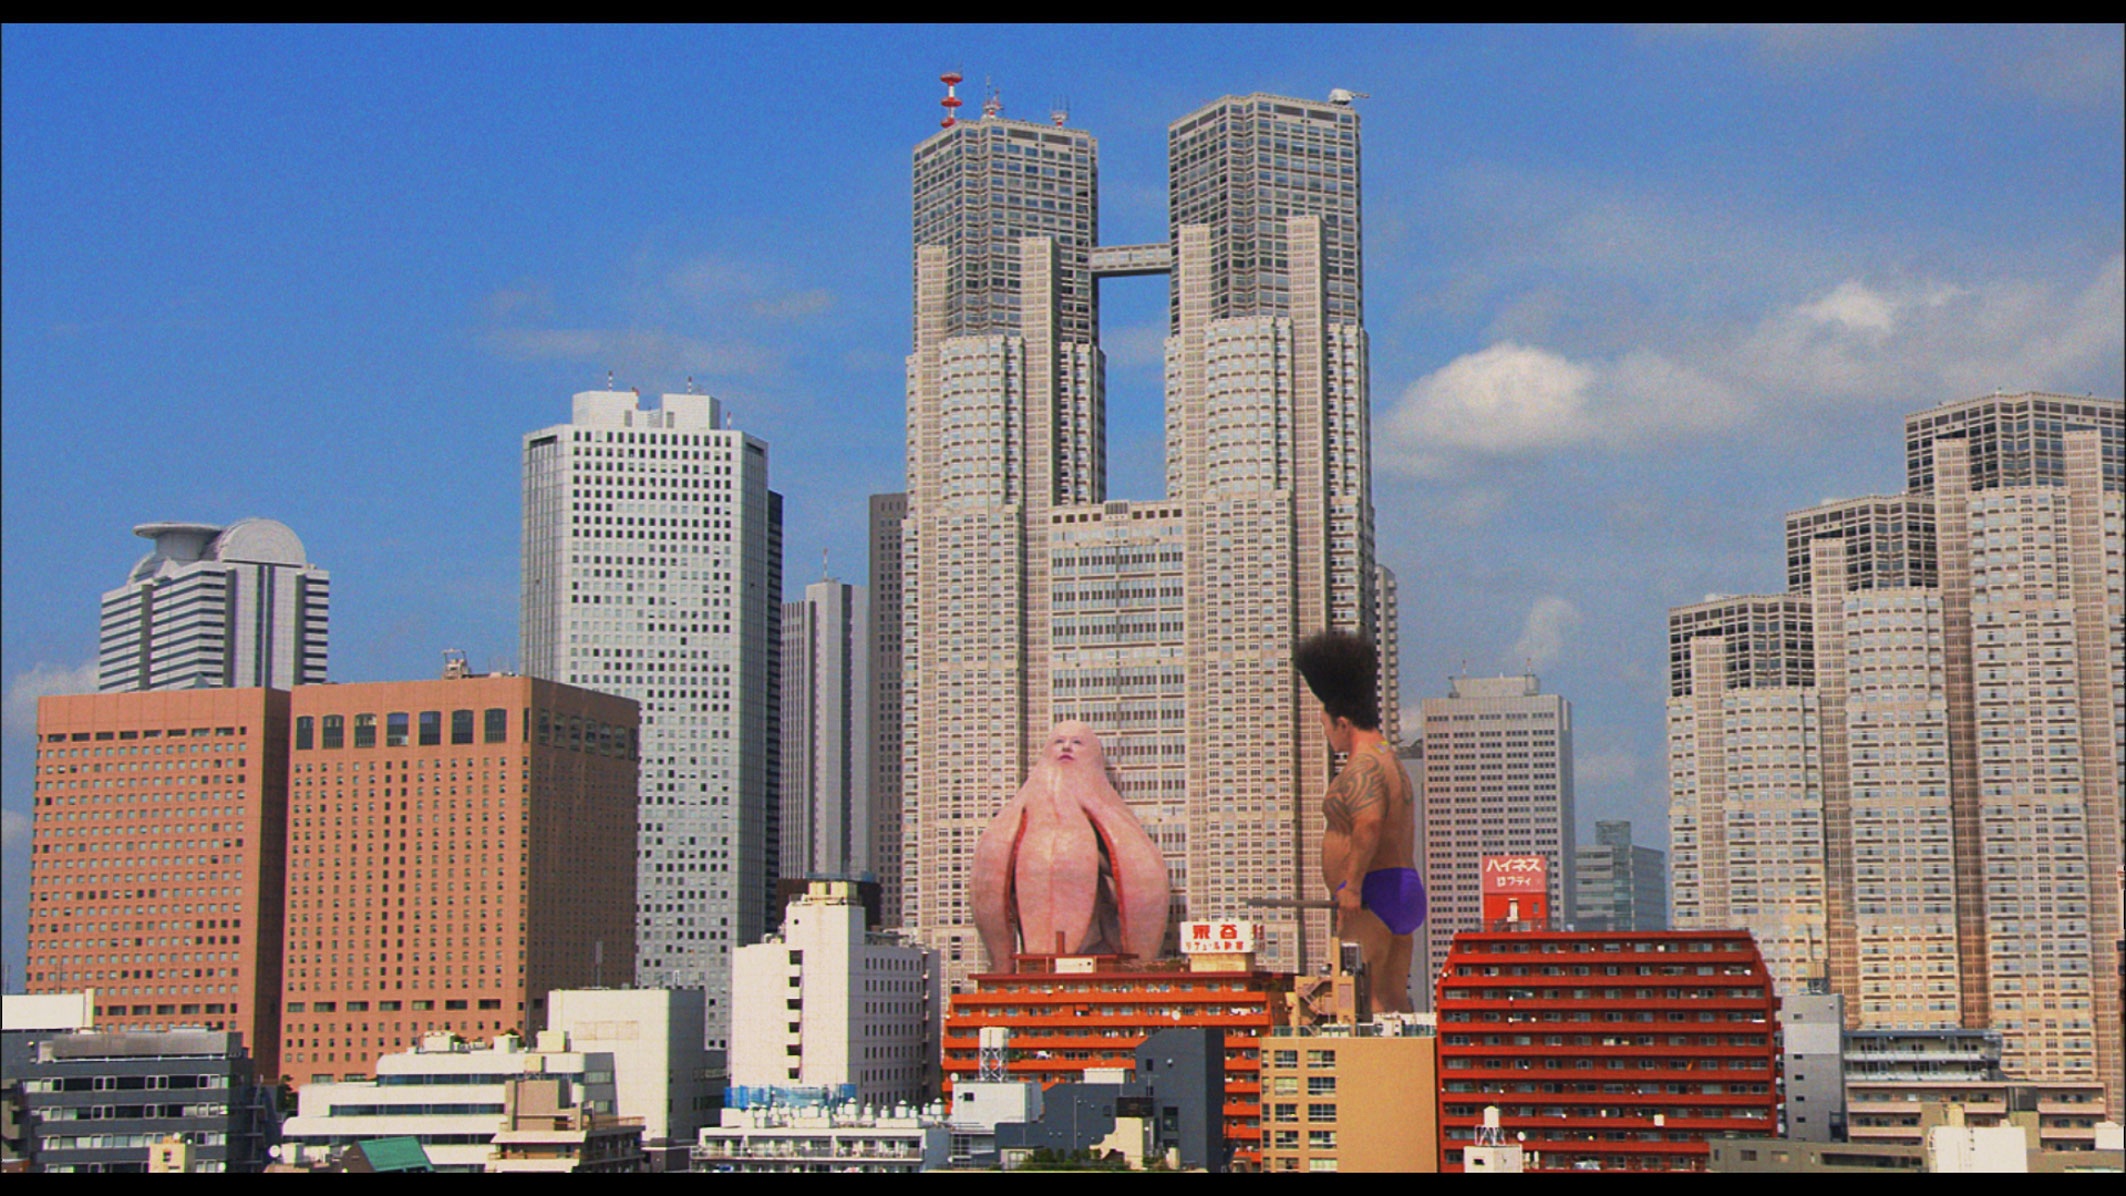 Big Man Japan (2007)